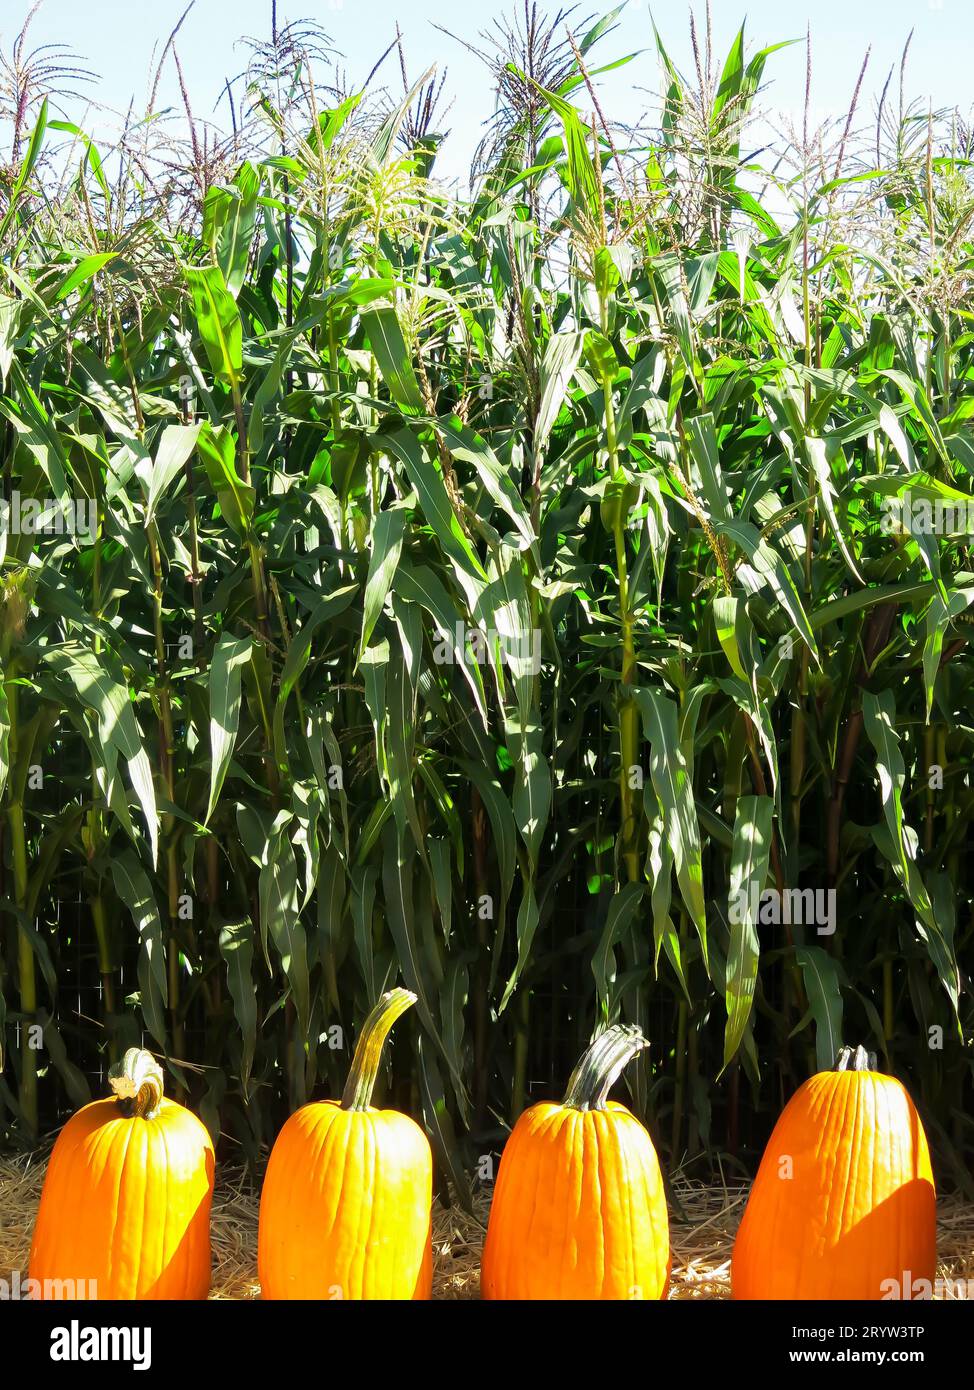 Pumpkins on Display in Front of Corn Stalks Stock Photo